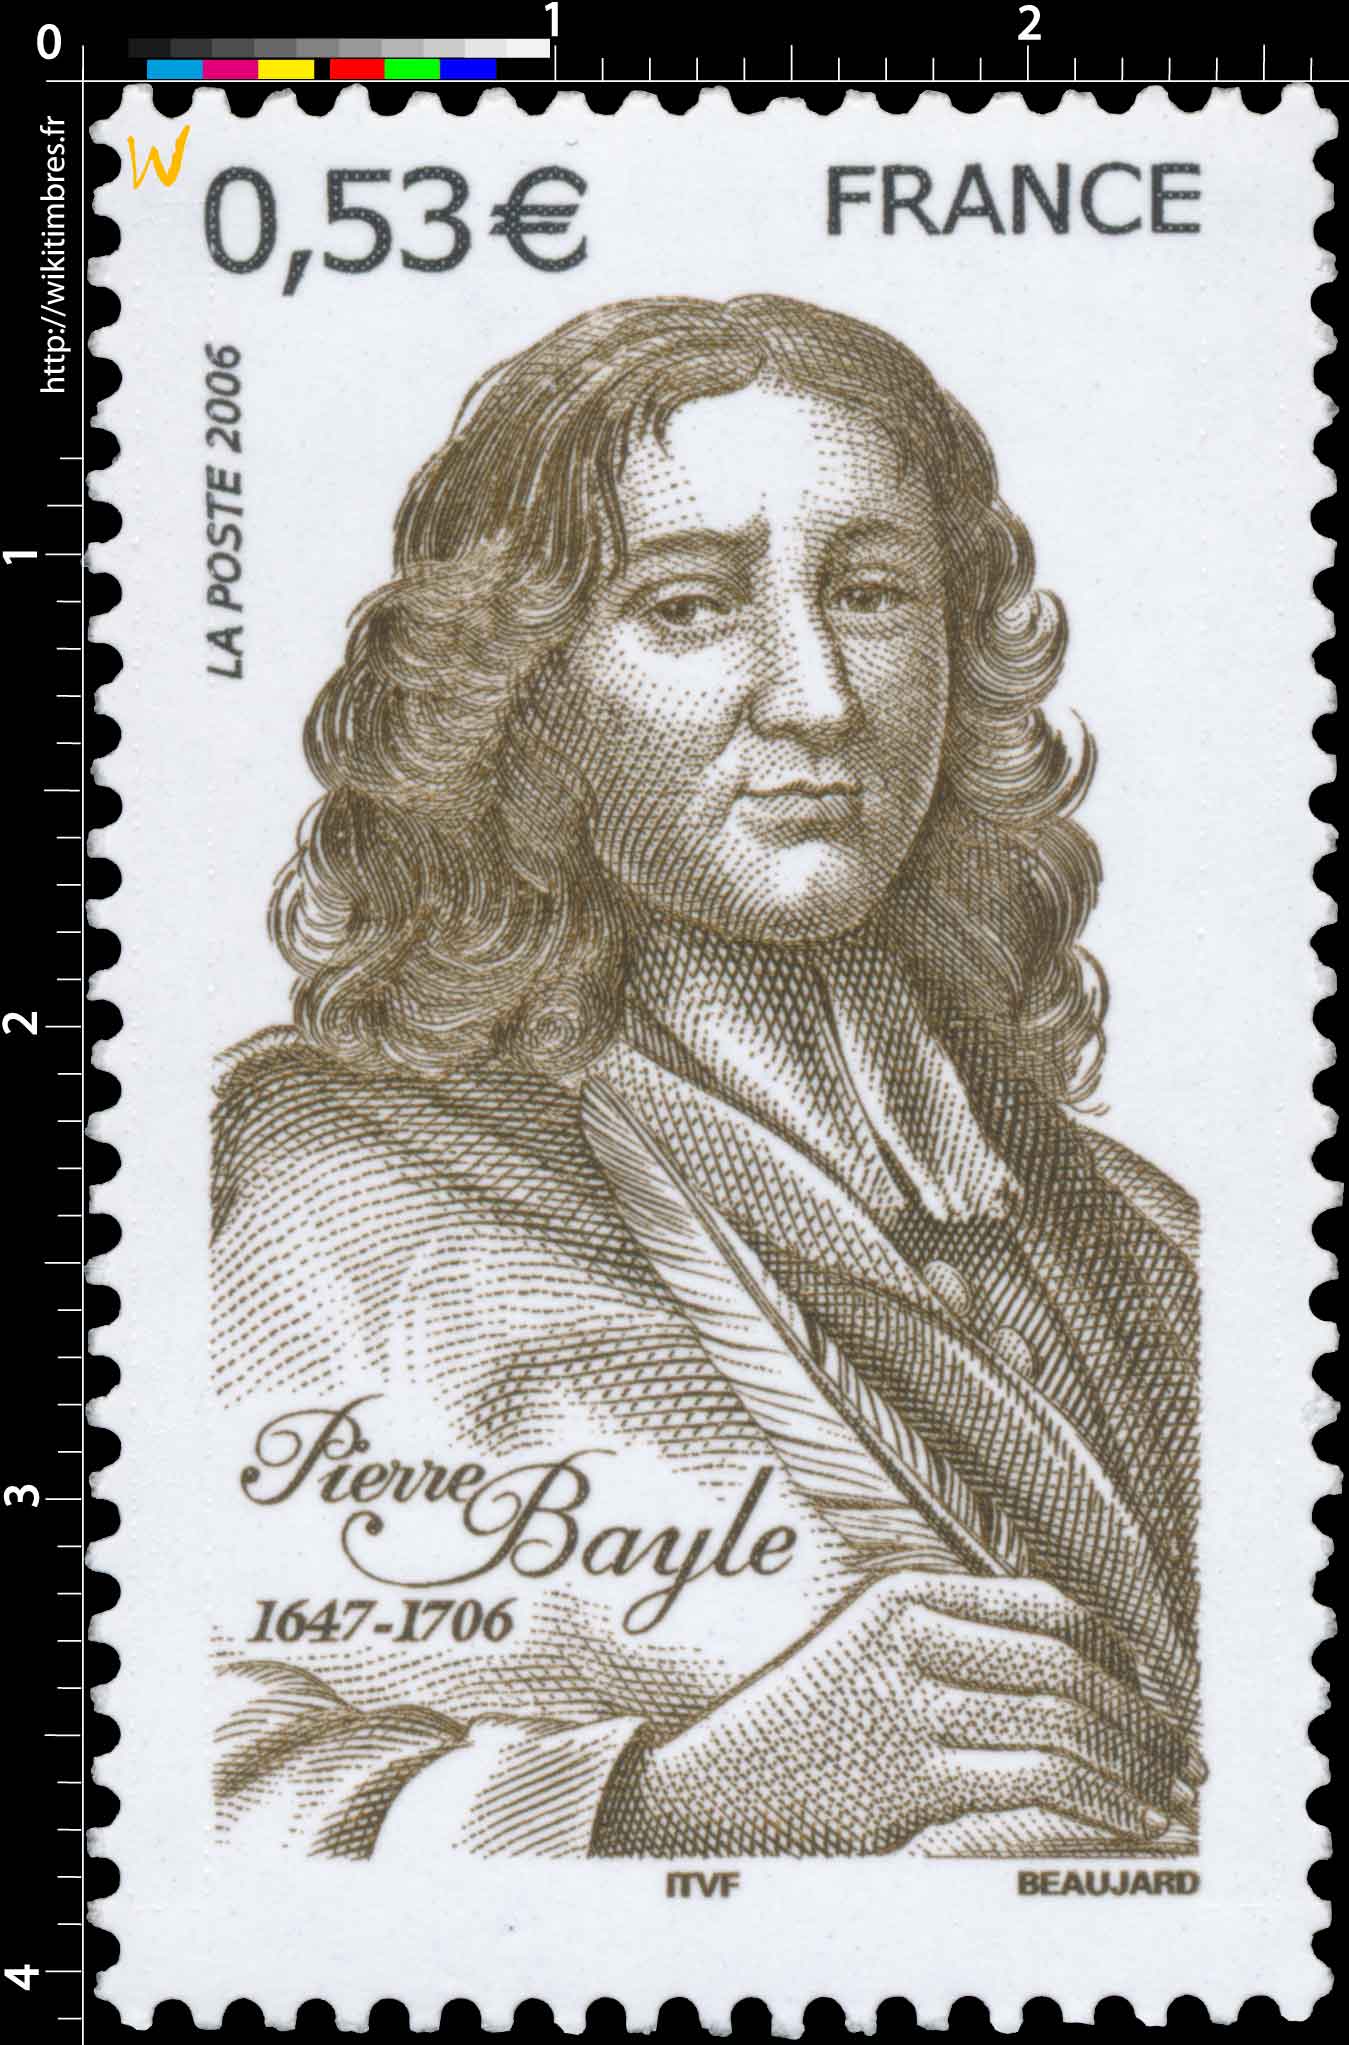 2006 Pierre Bayle 1647-1706